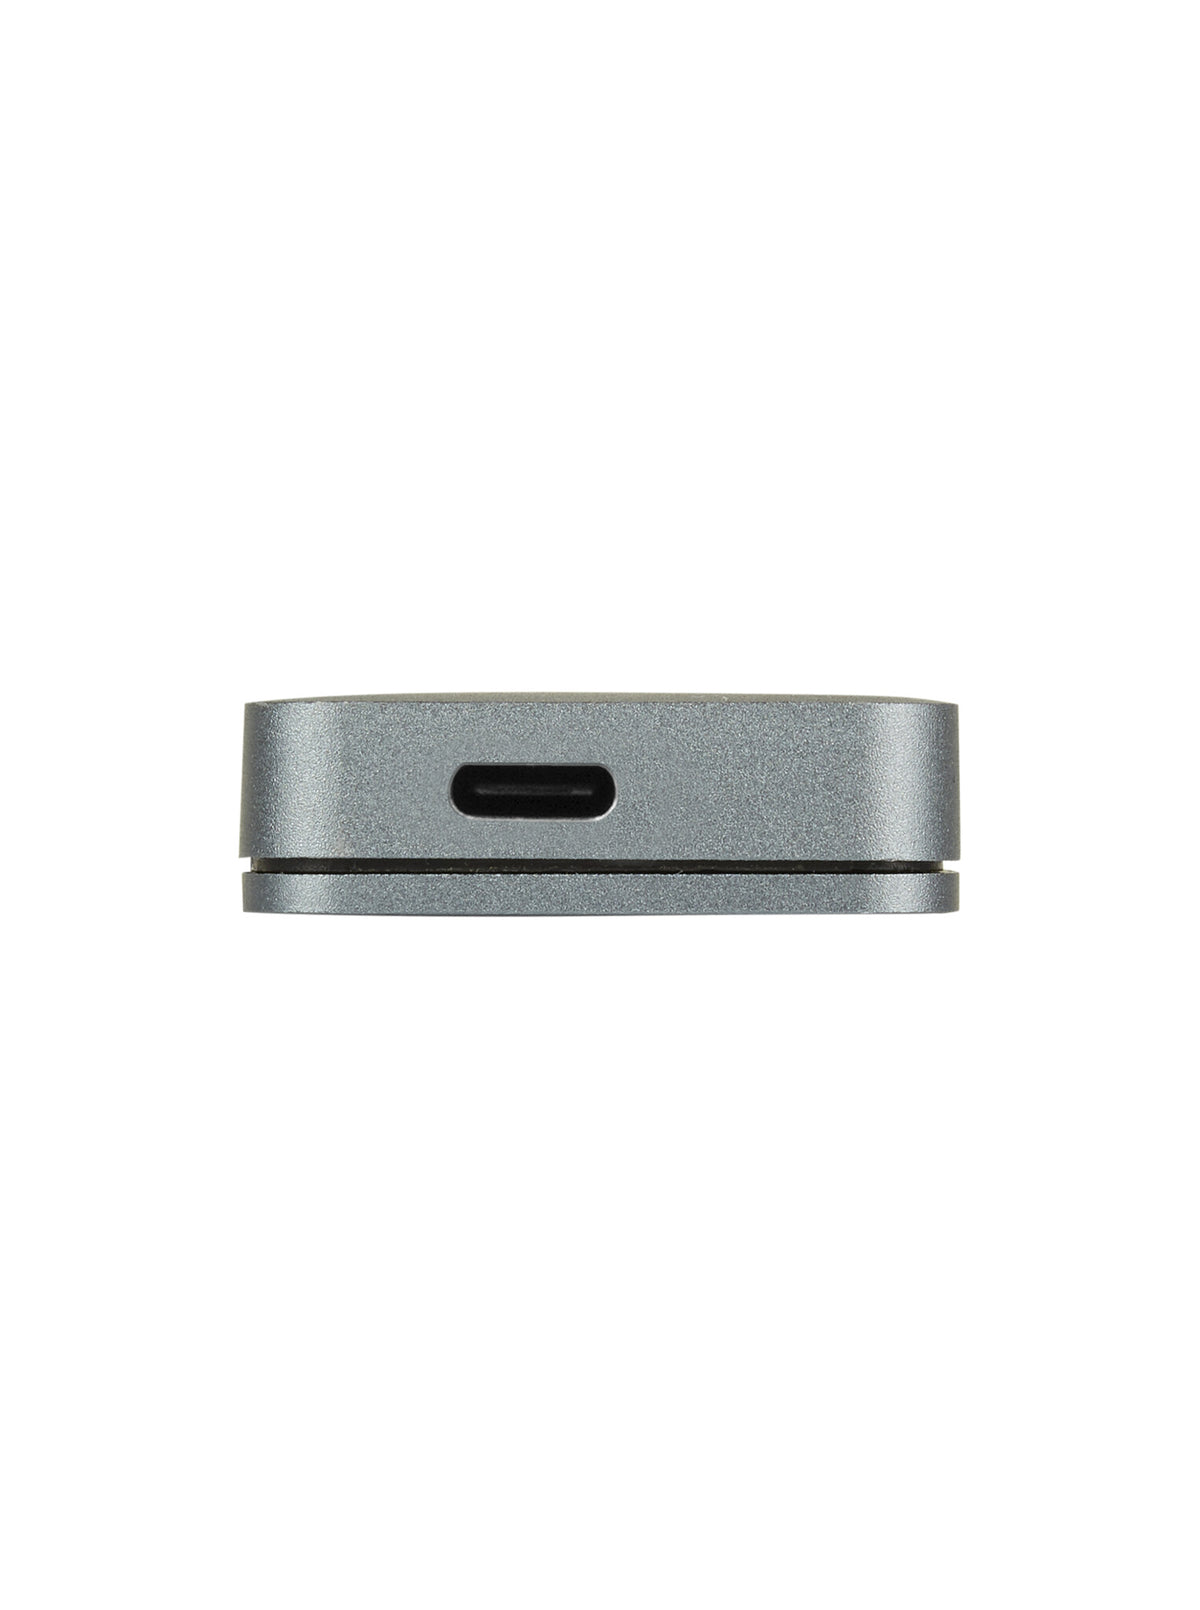 Verbatim Executive Fingerprint Secure - USB 3.1 Gen 1 External SSD - 1 TB